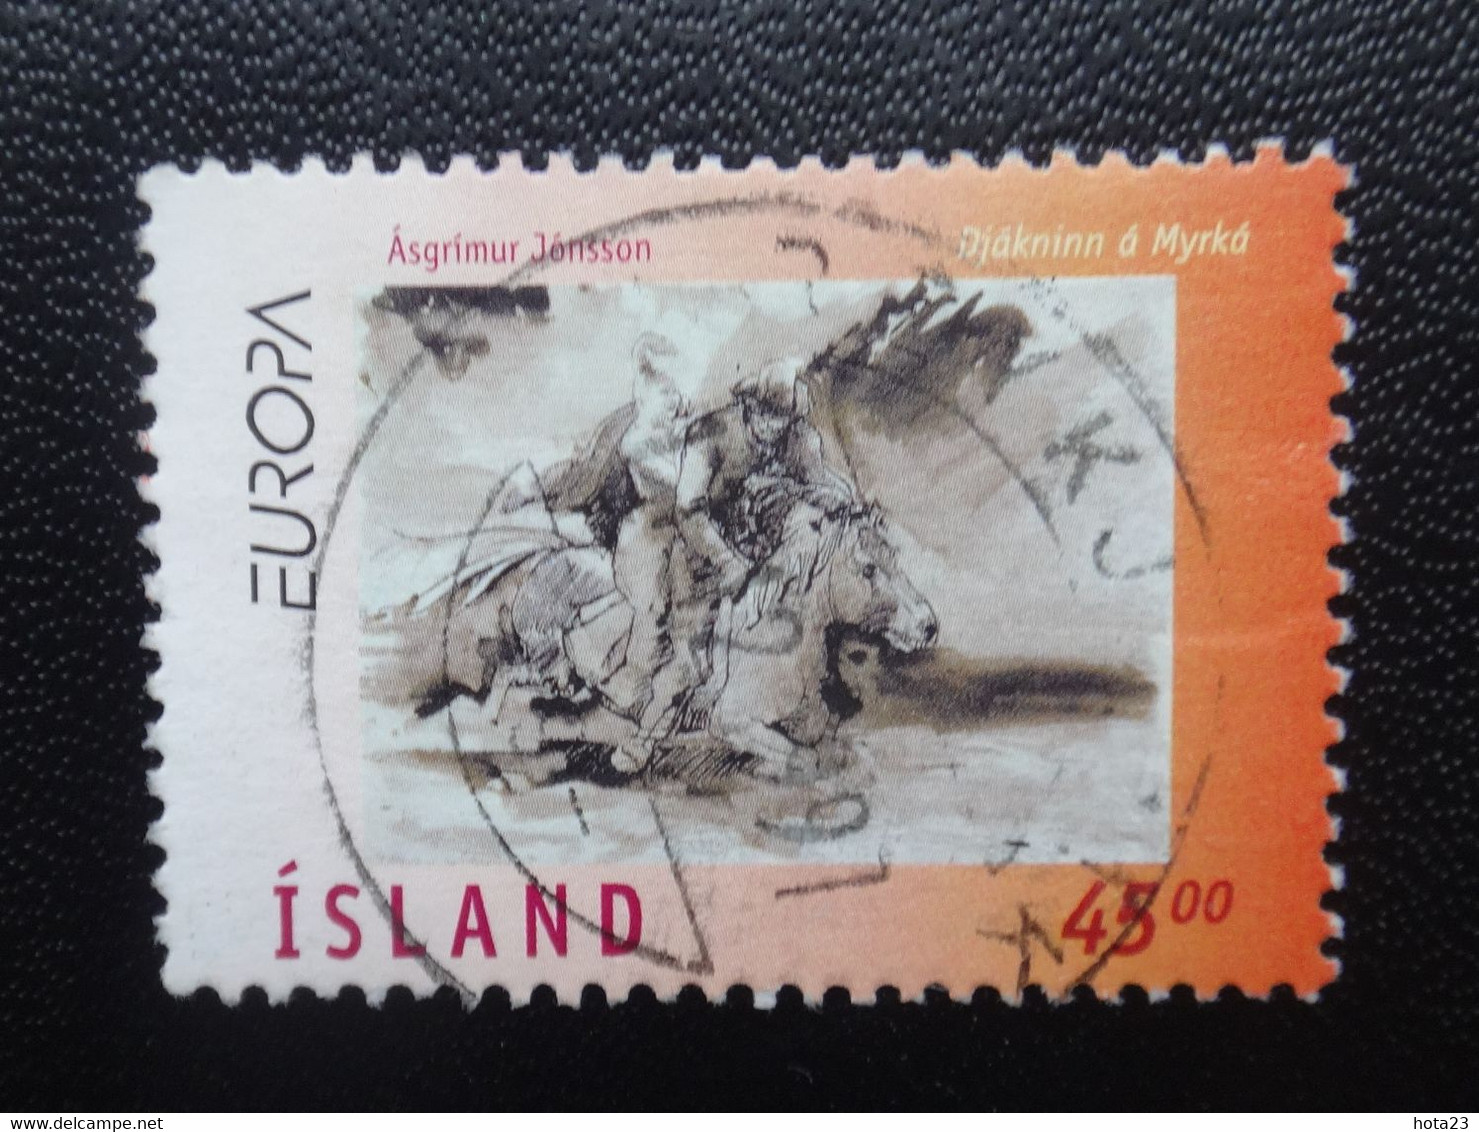 Island Iceland Islande MNH 1997 Europe Legends Used Stamp  (0) - Used Stamps